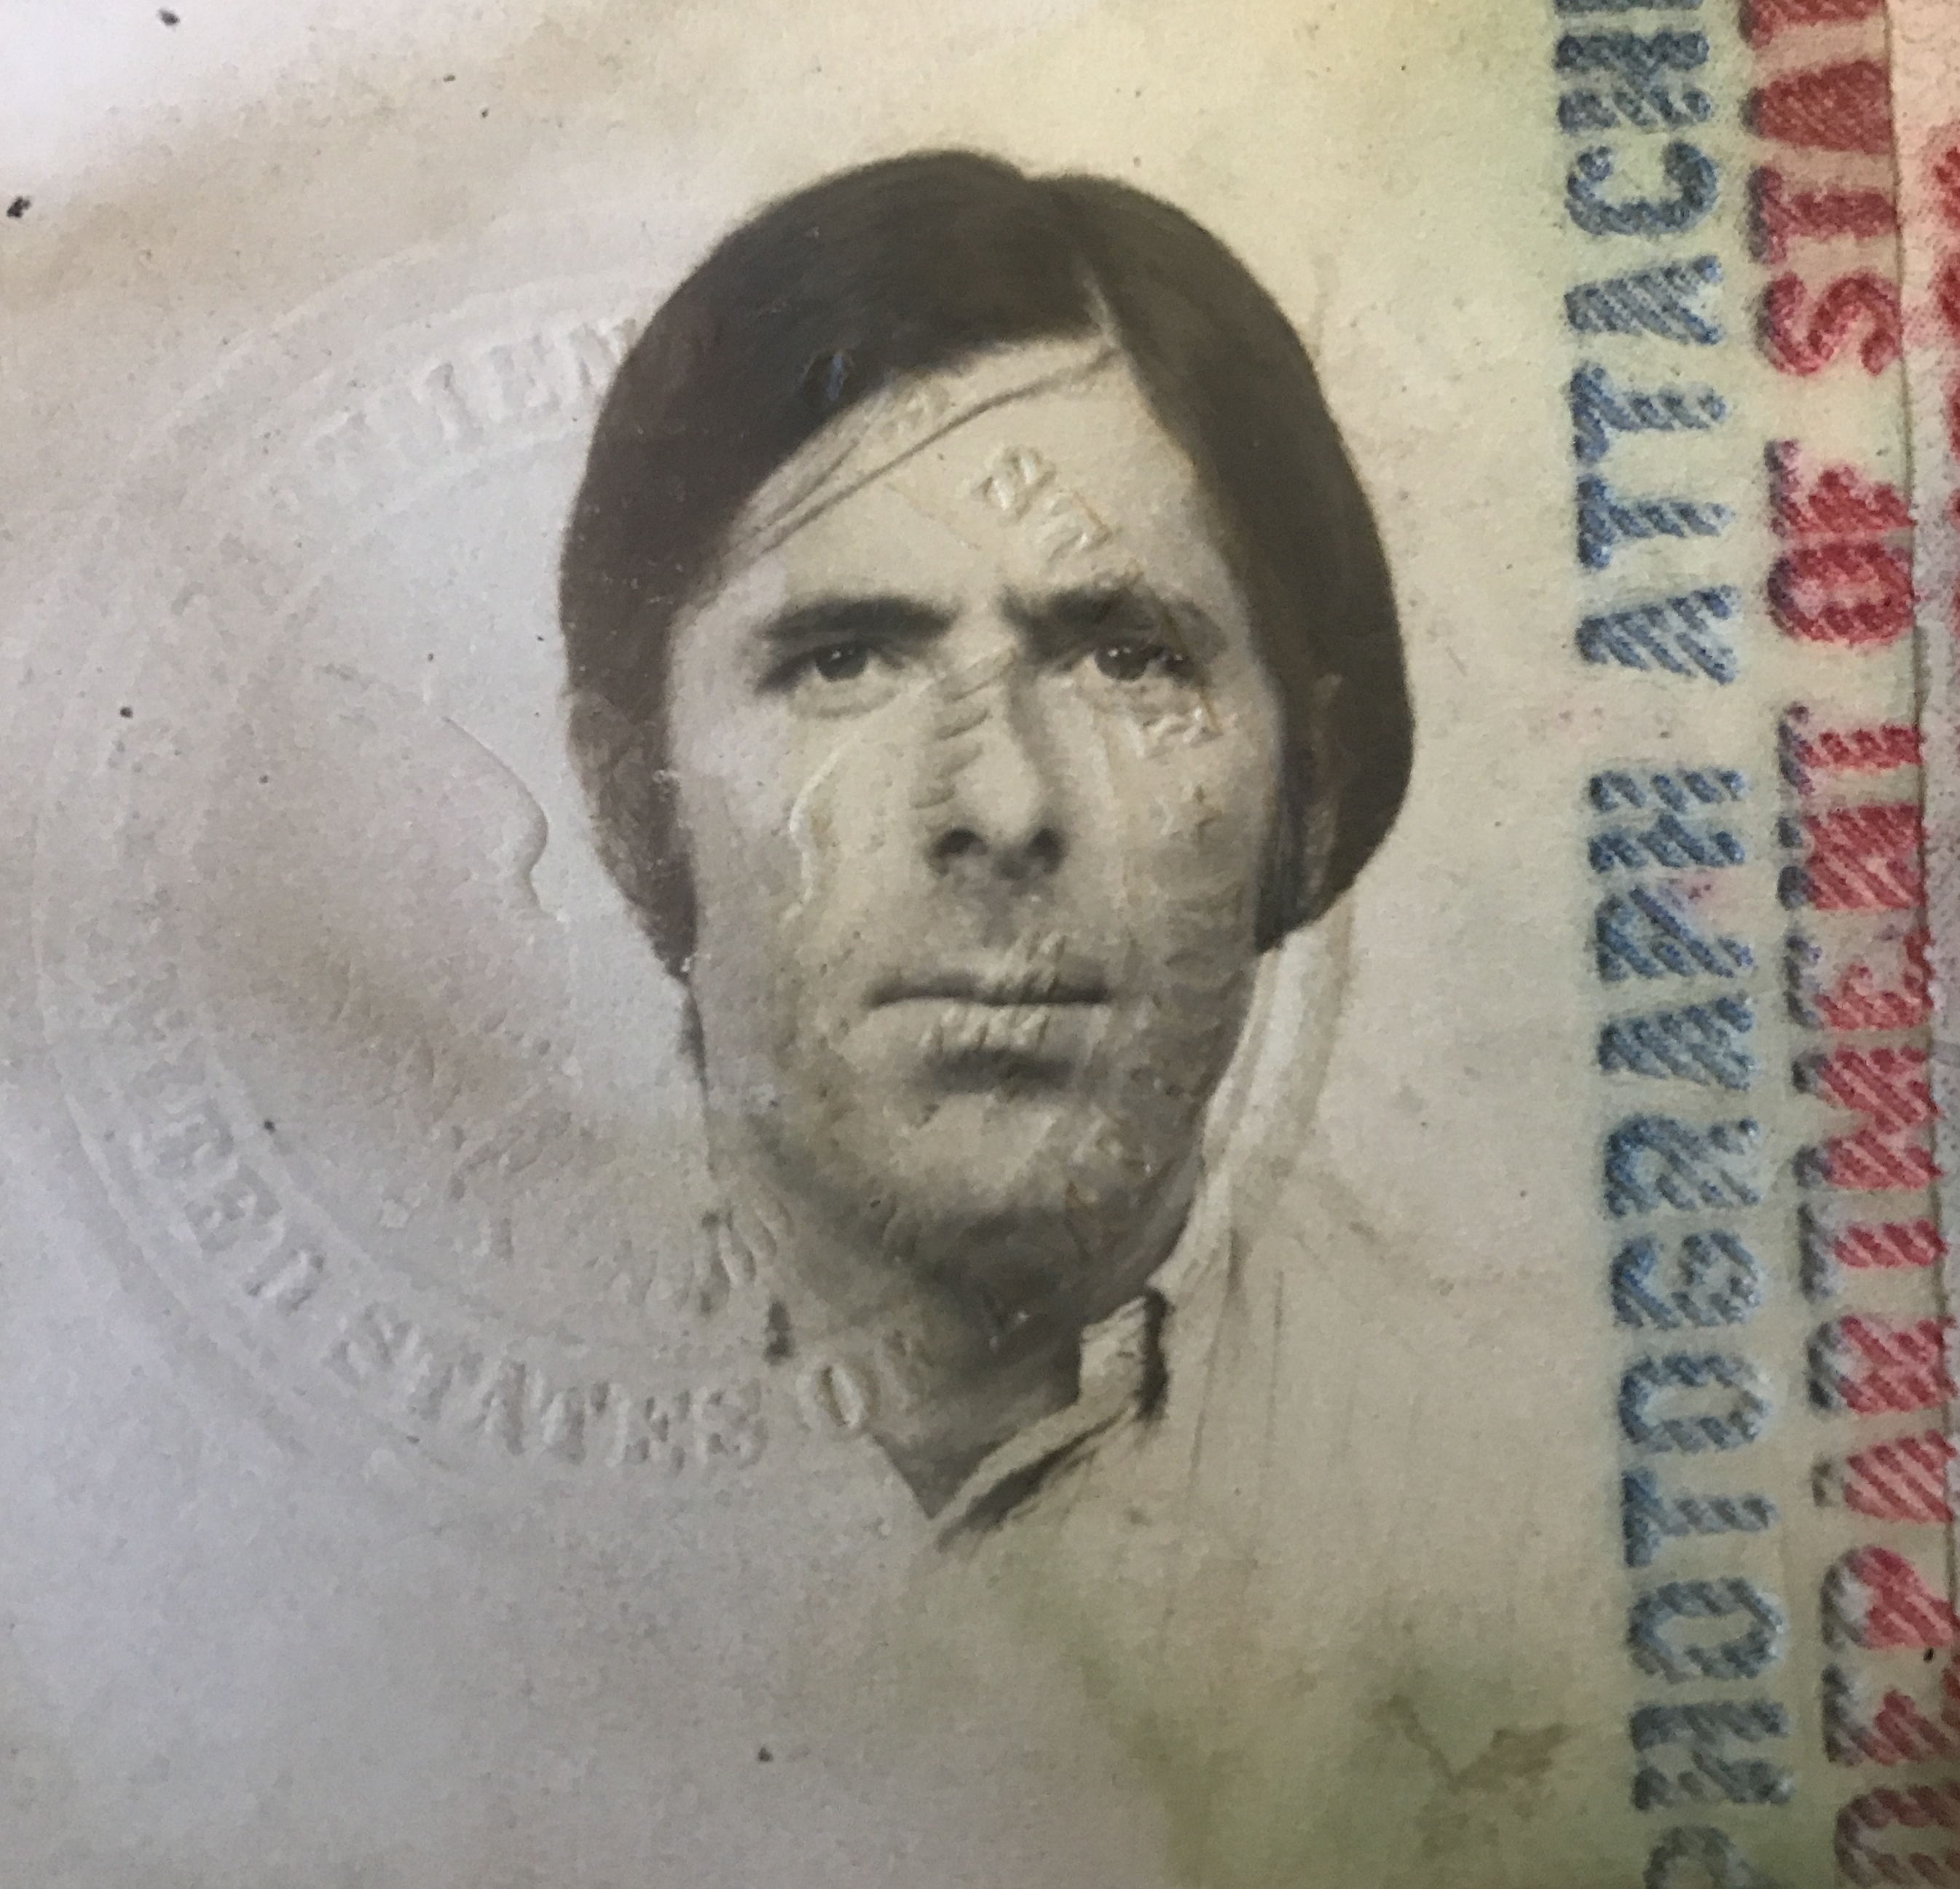 1964 passport photo courtesy of Michael Delacour.